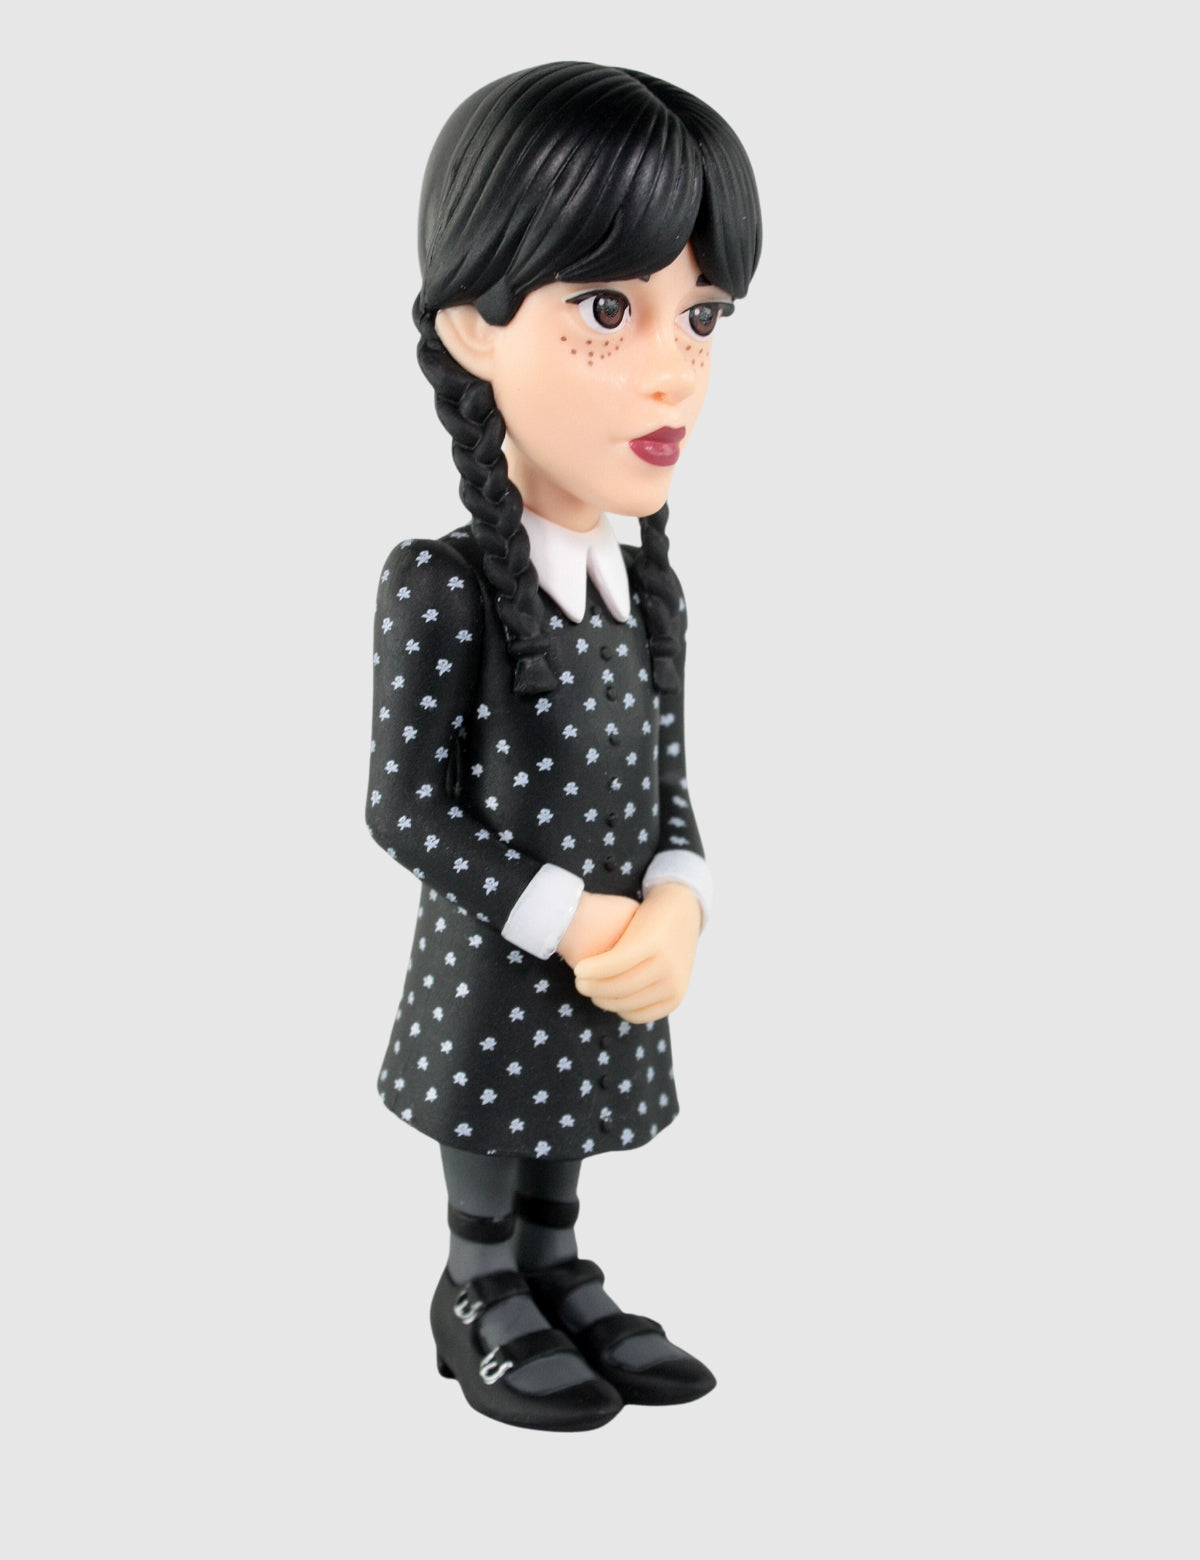 Mercredi - Figurine Minix Mercredi Addams en robe de bal (W4